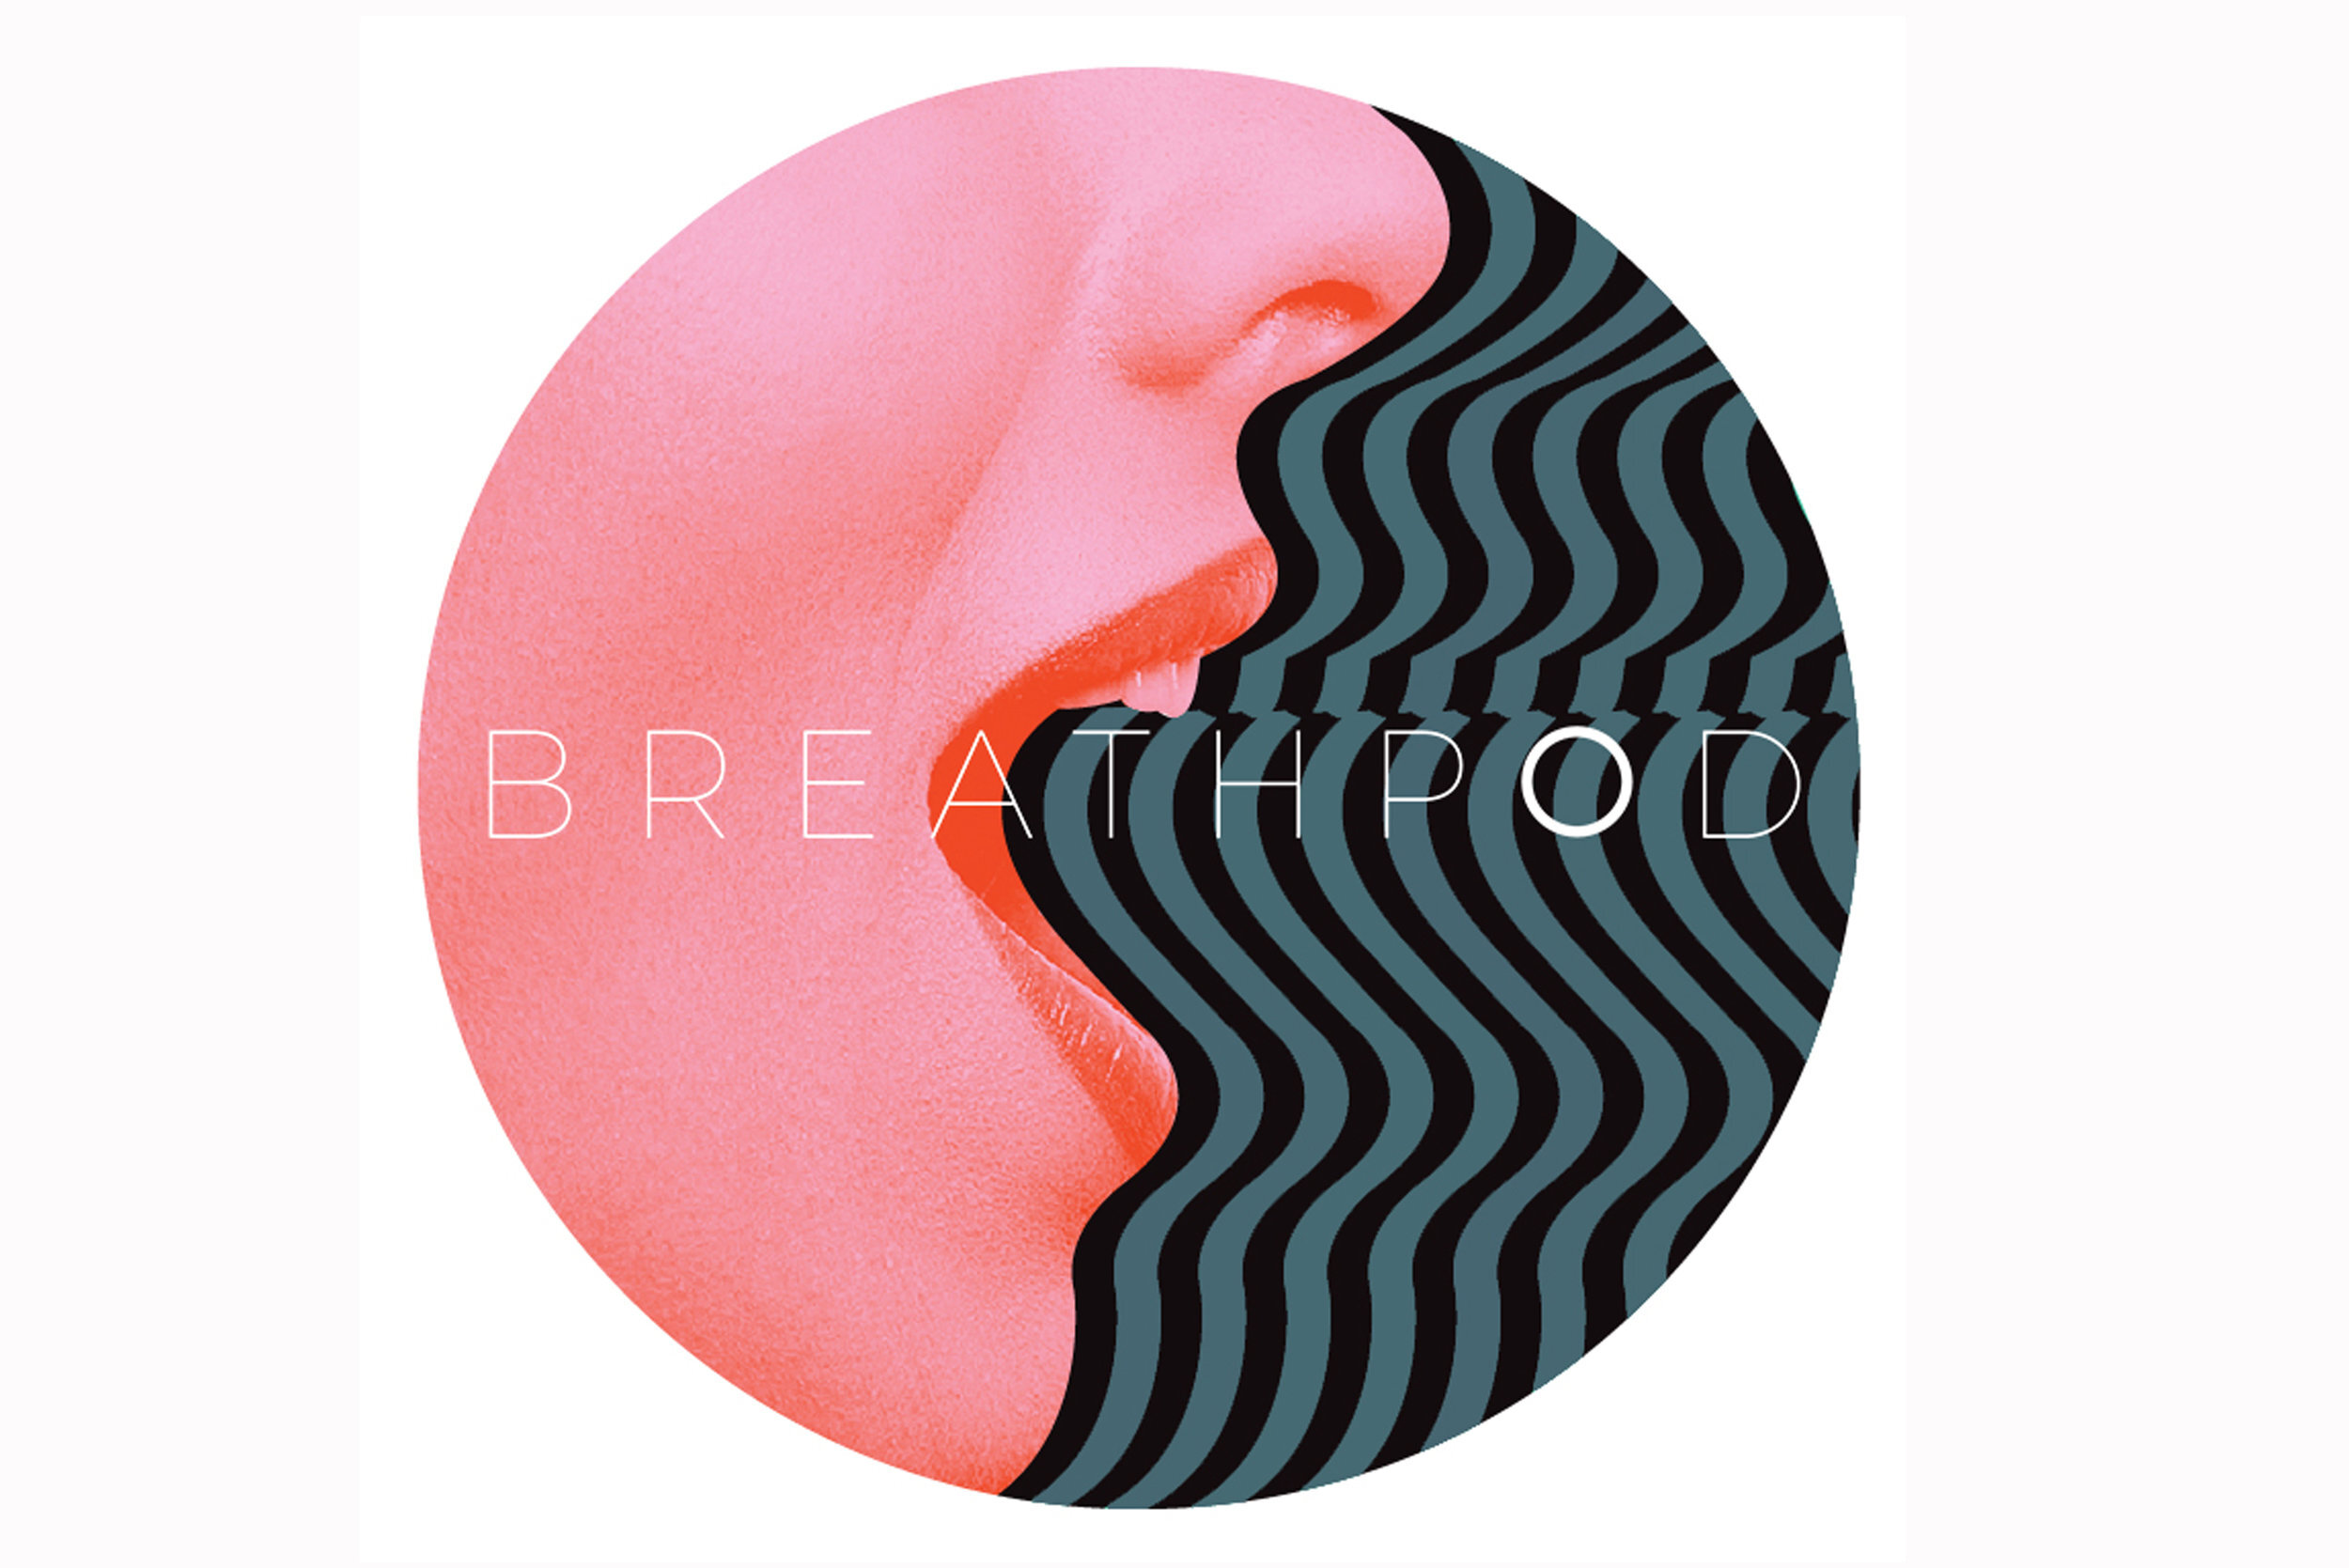 Breathpod+-+March+ministry.jpg